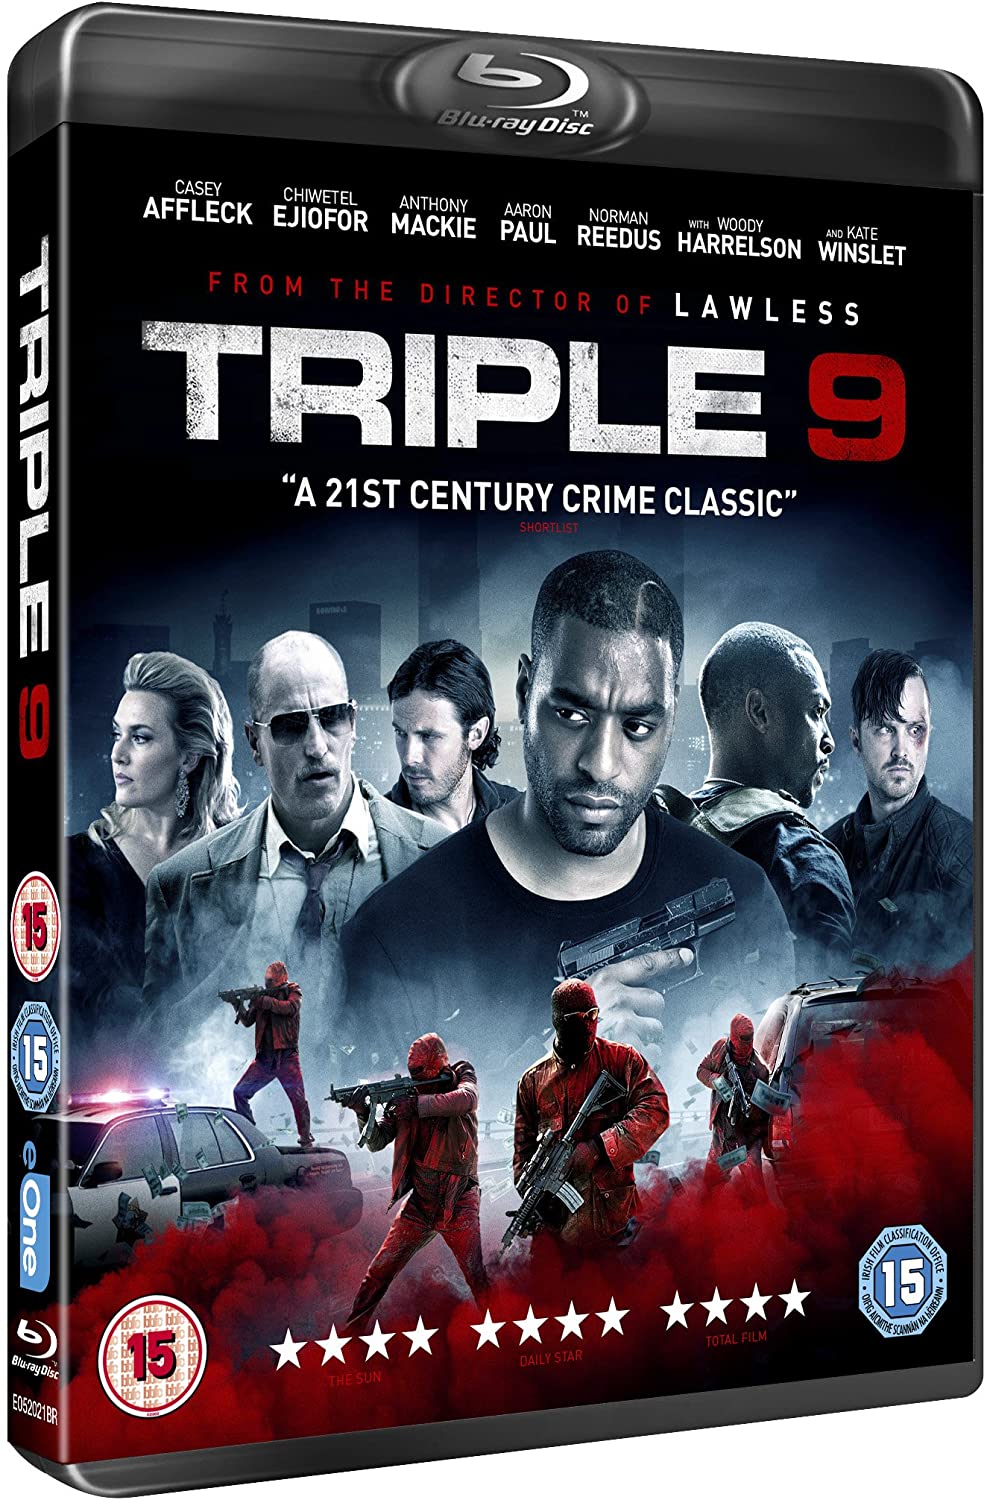 Triple 9 [2016] (Blu-ray)